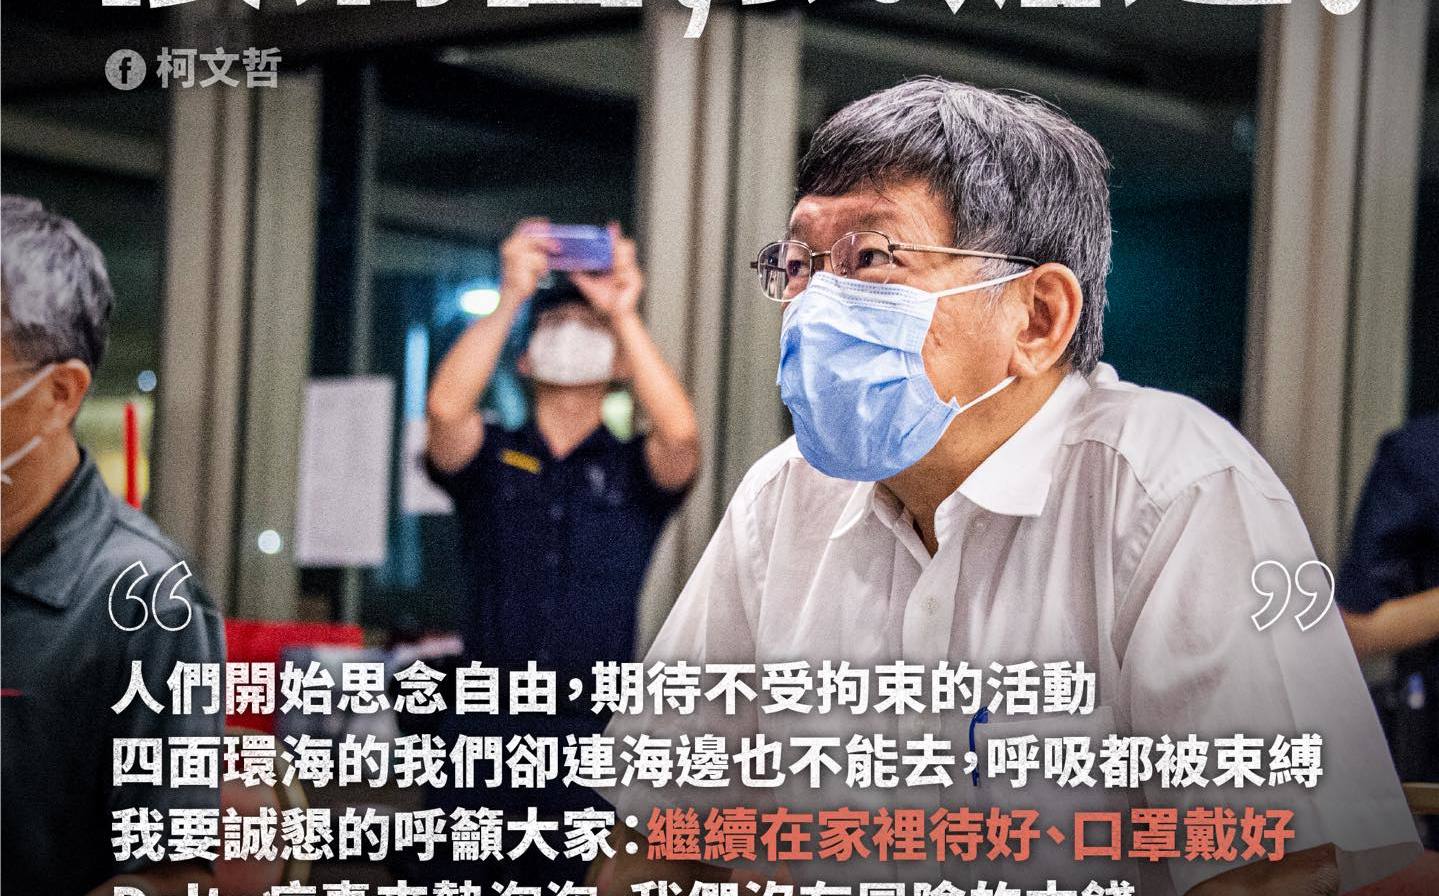 Delta已侵入台灣!柯文哲籲中央：盡速採購疫苗 把人民生命放第一位 |